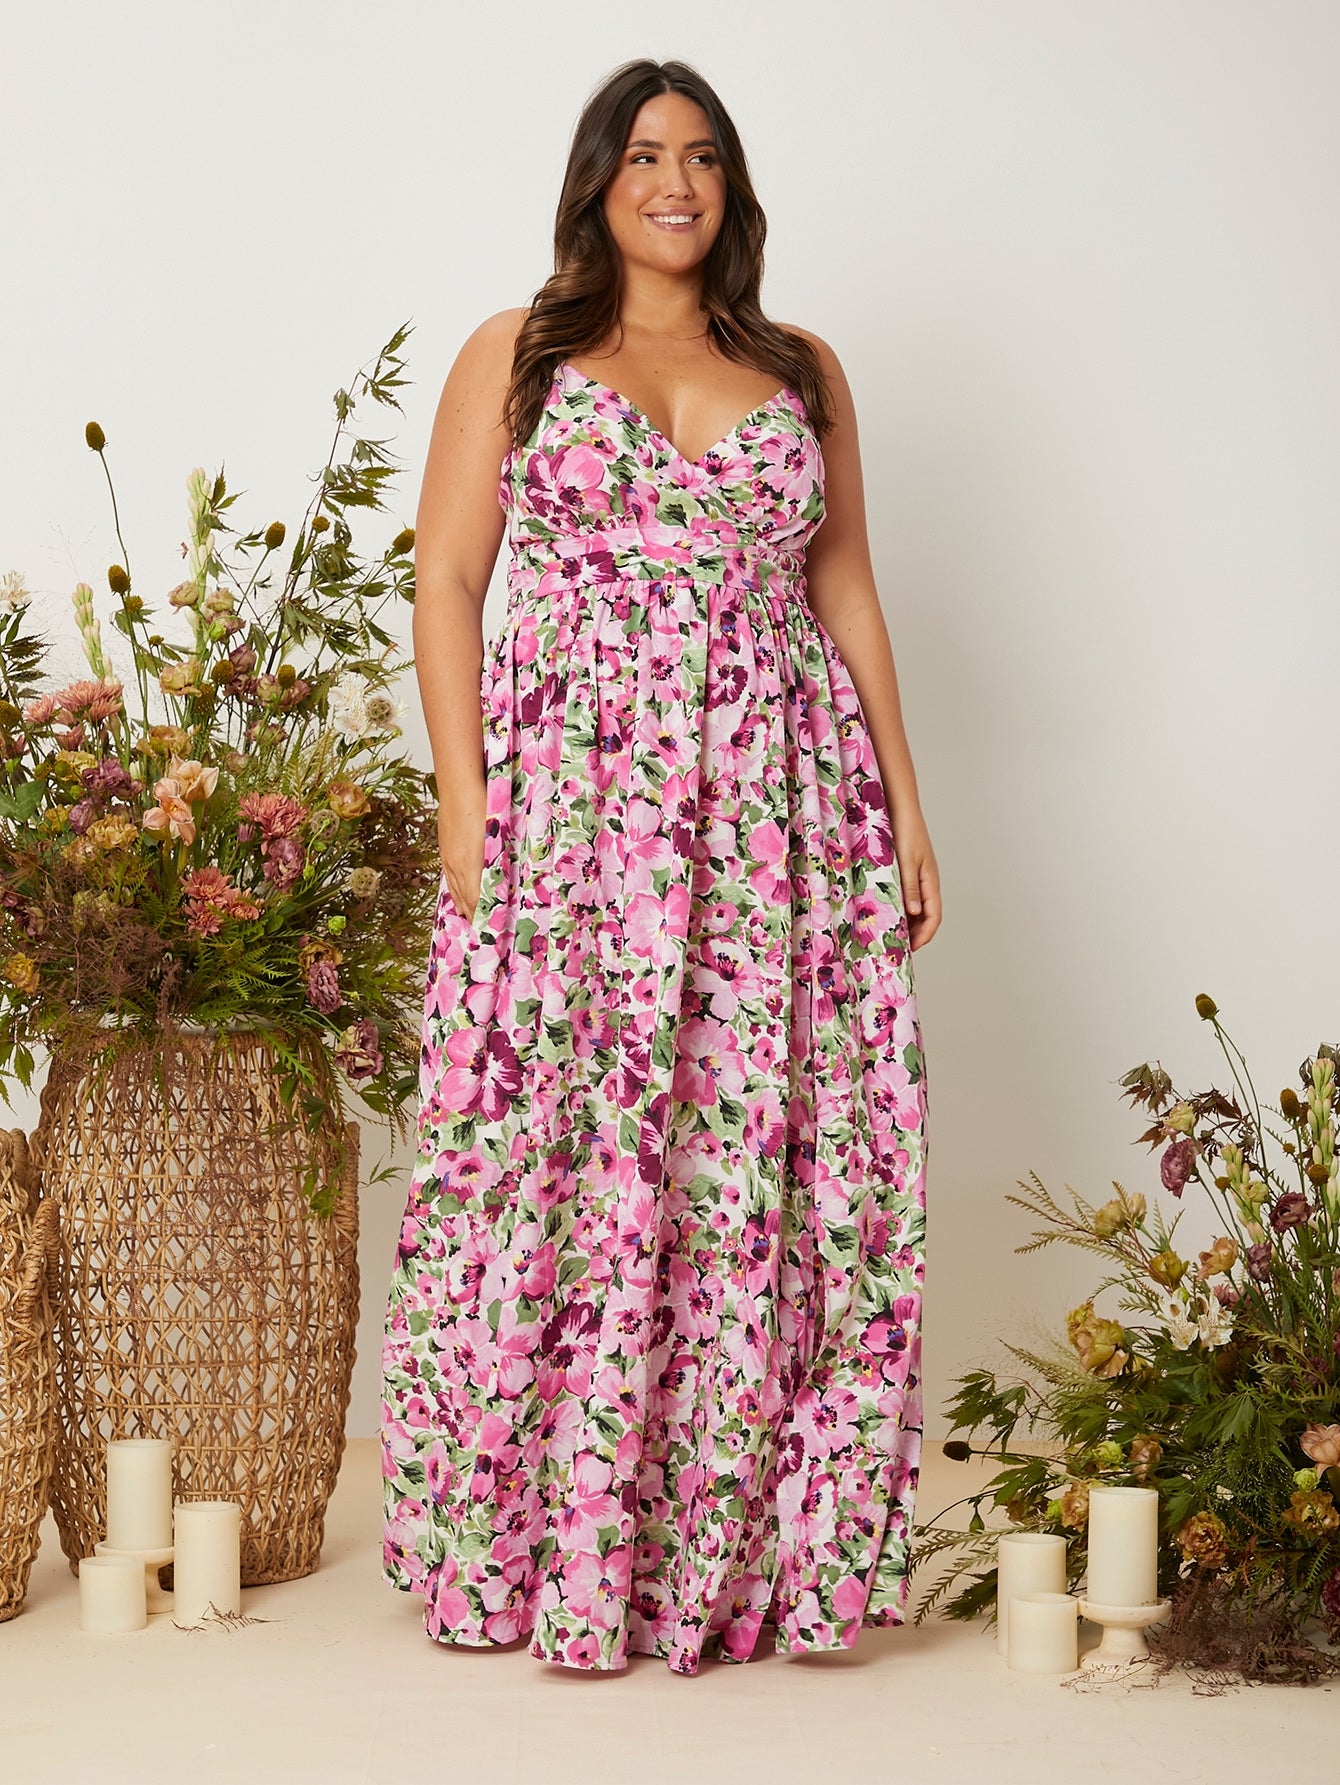 Happiest Garden Maxi Plus Floral Print Criss-cross Tie Backless Cami Dress